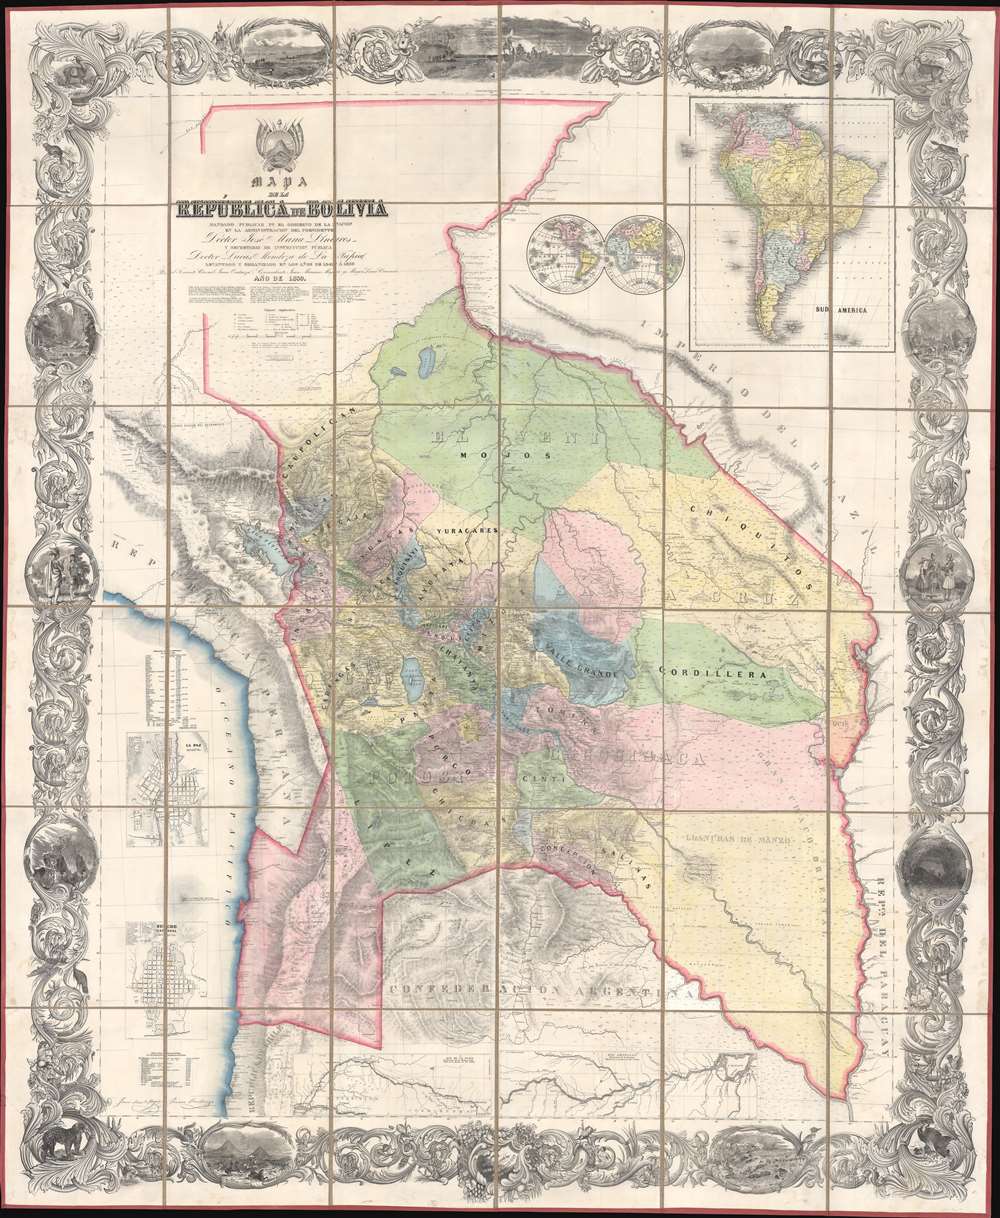 1859 Colton / Ondarza Folding Wall Map of Bolivia - a seminal map!